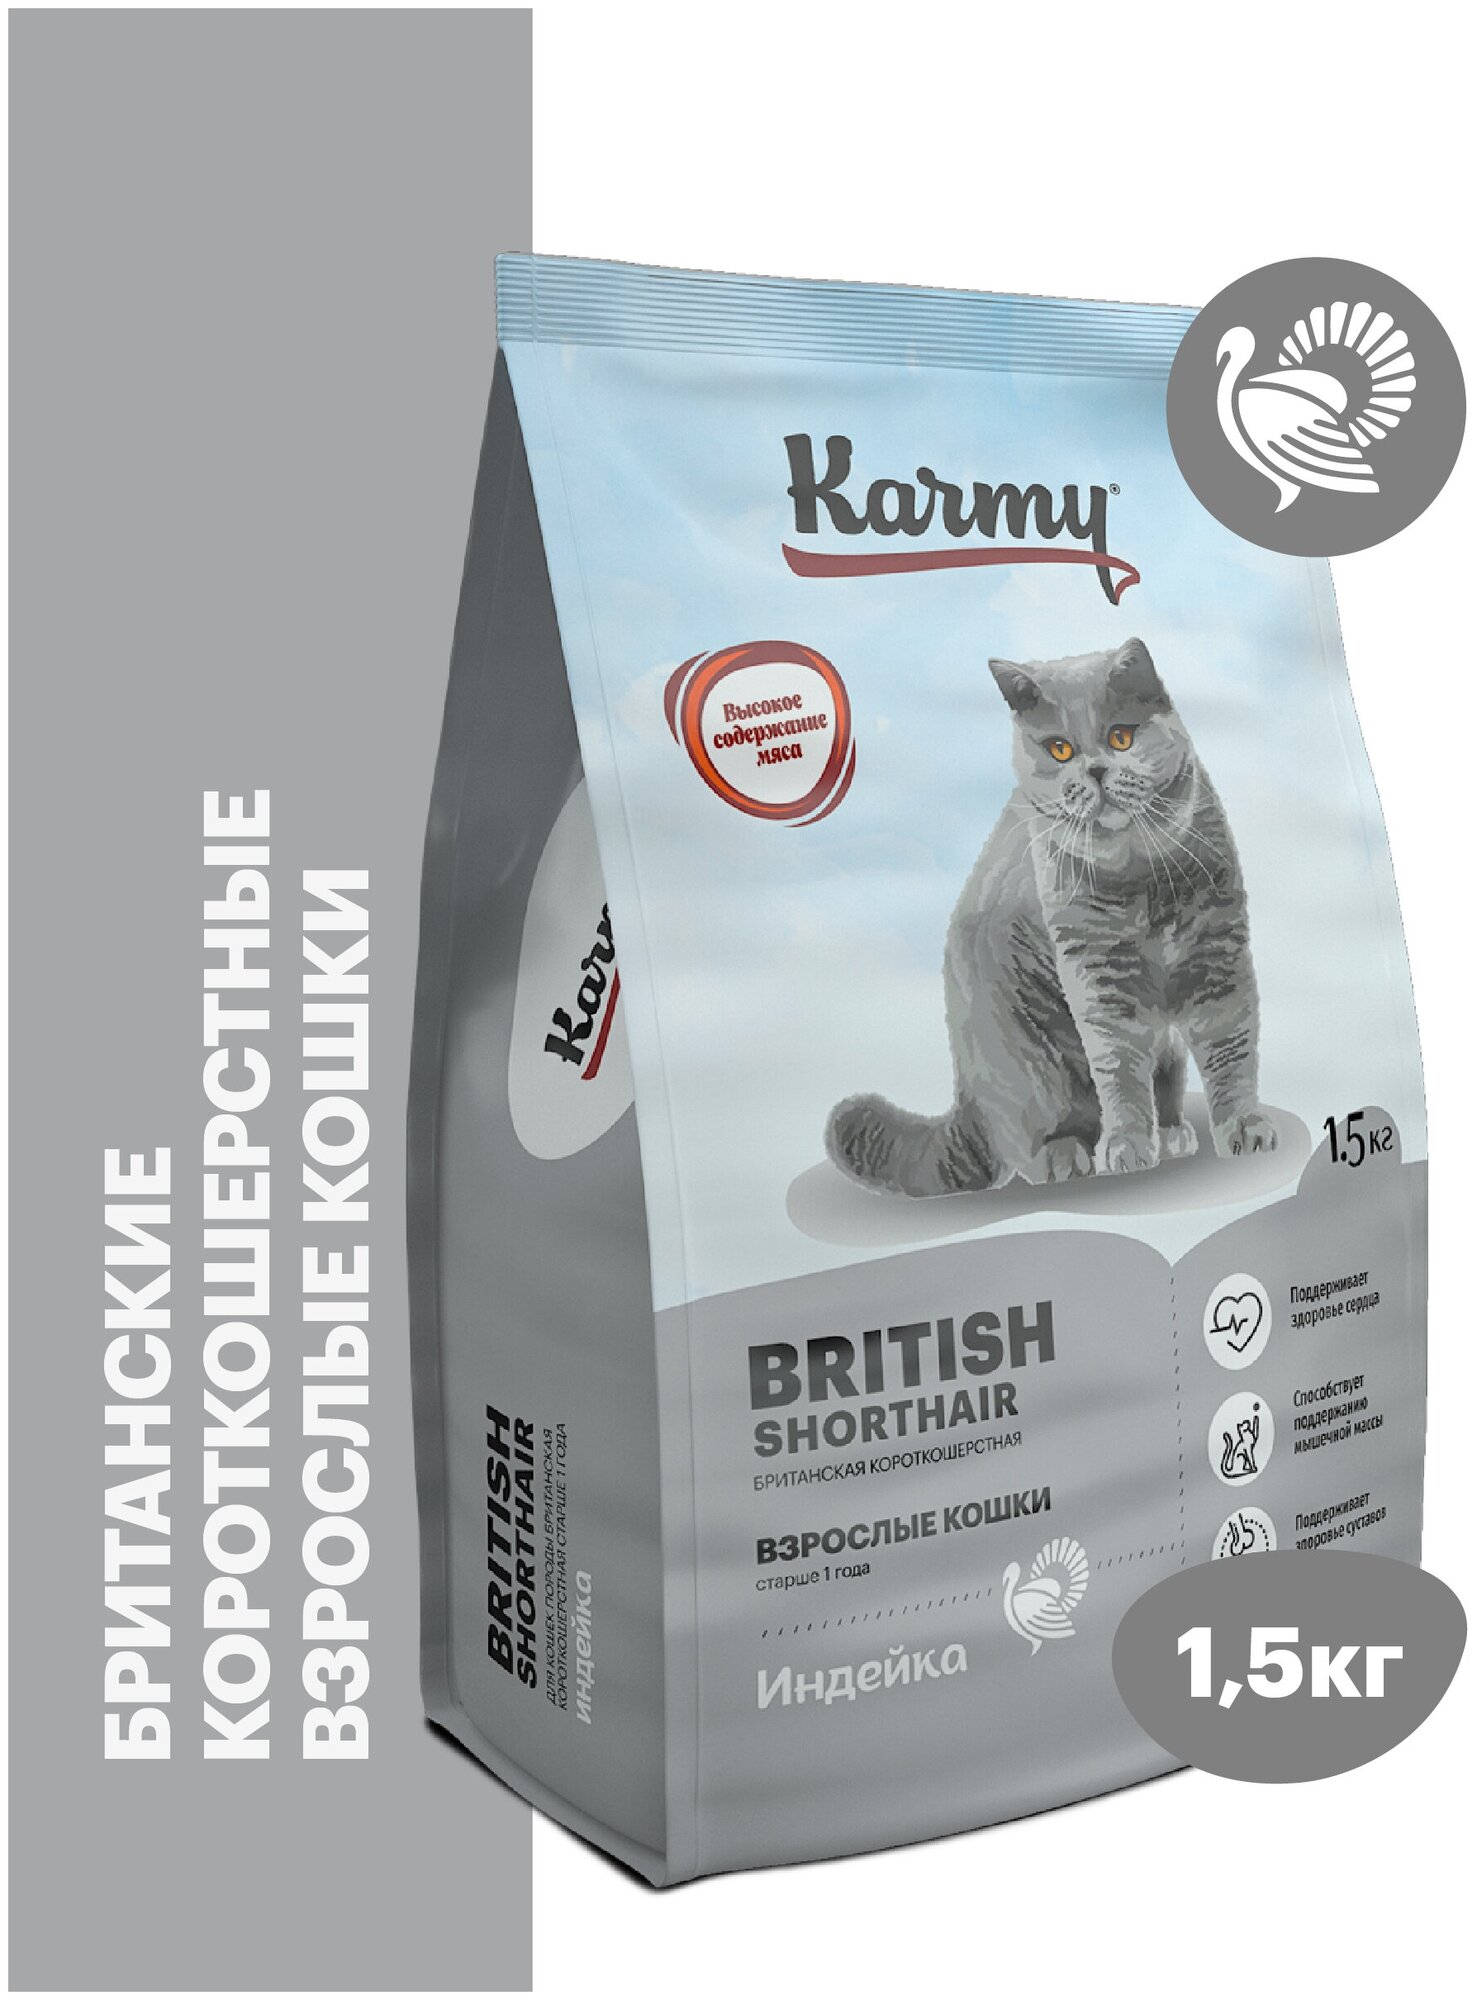 Сухой корм для кошек Karmy British Shorthair индейка